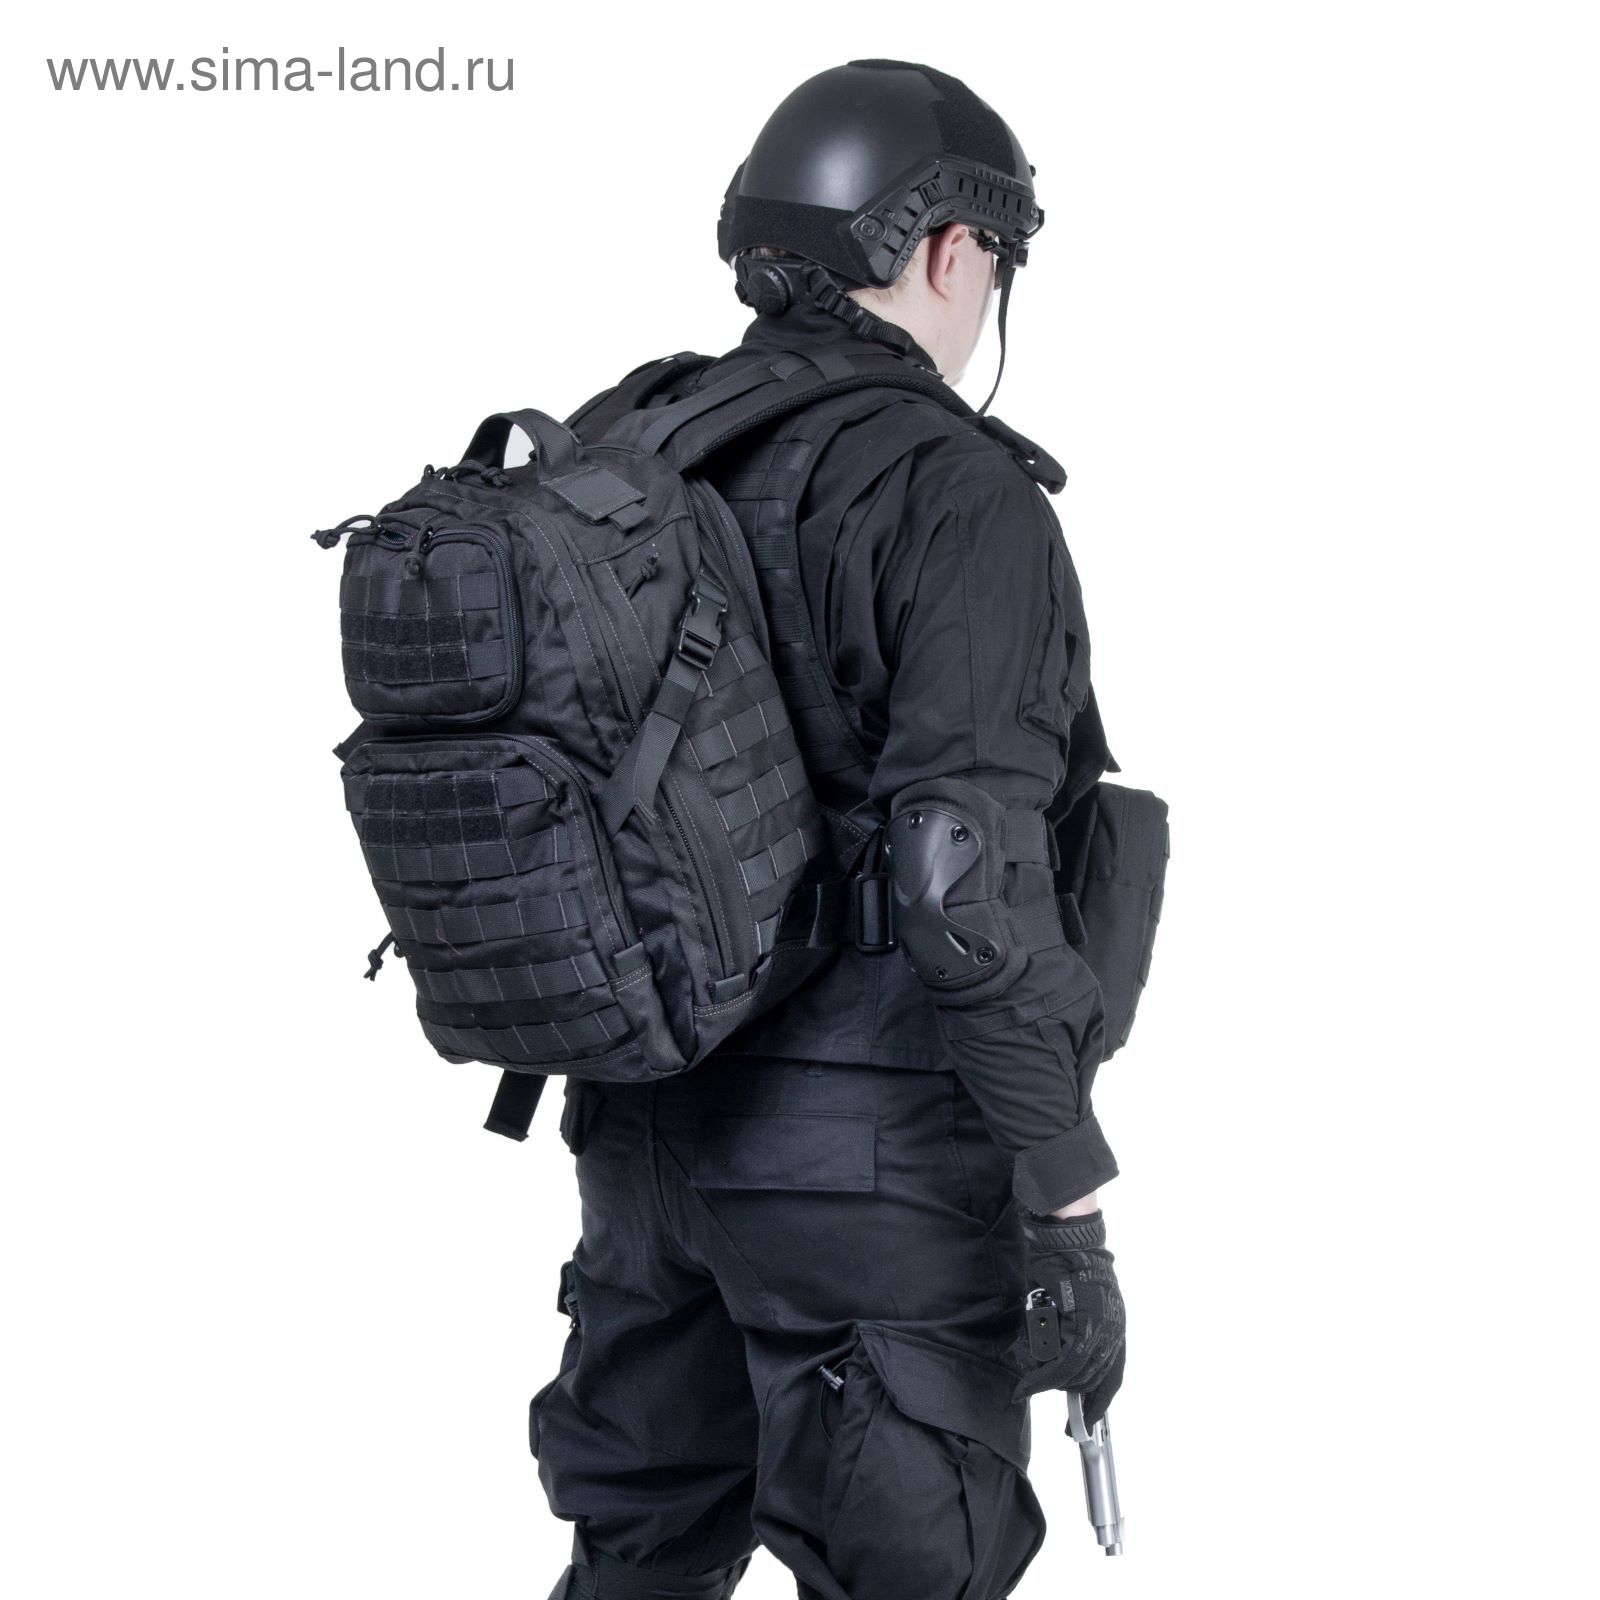 Рюкзак Travel Backpack Black BP-07-BK, 45 л